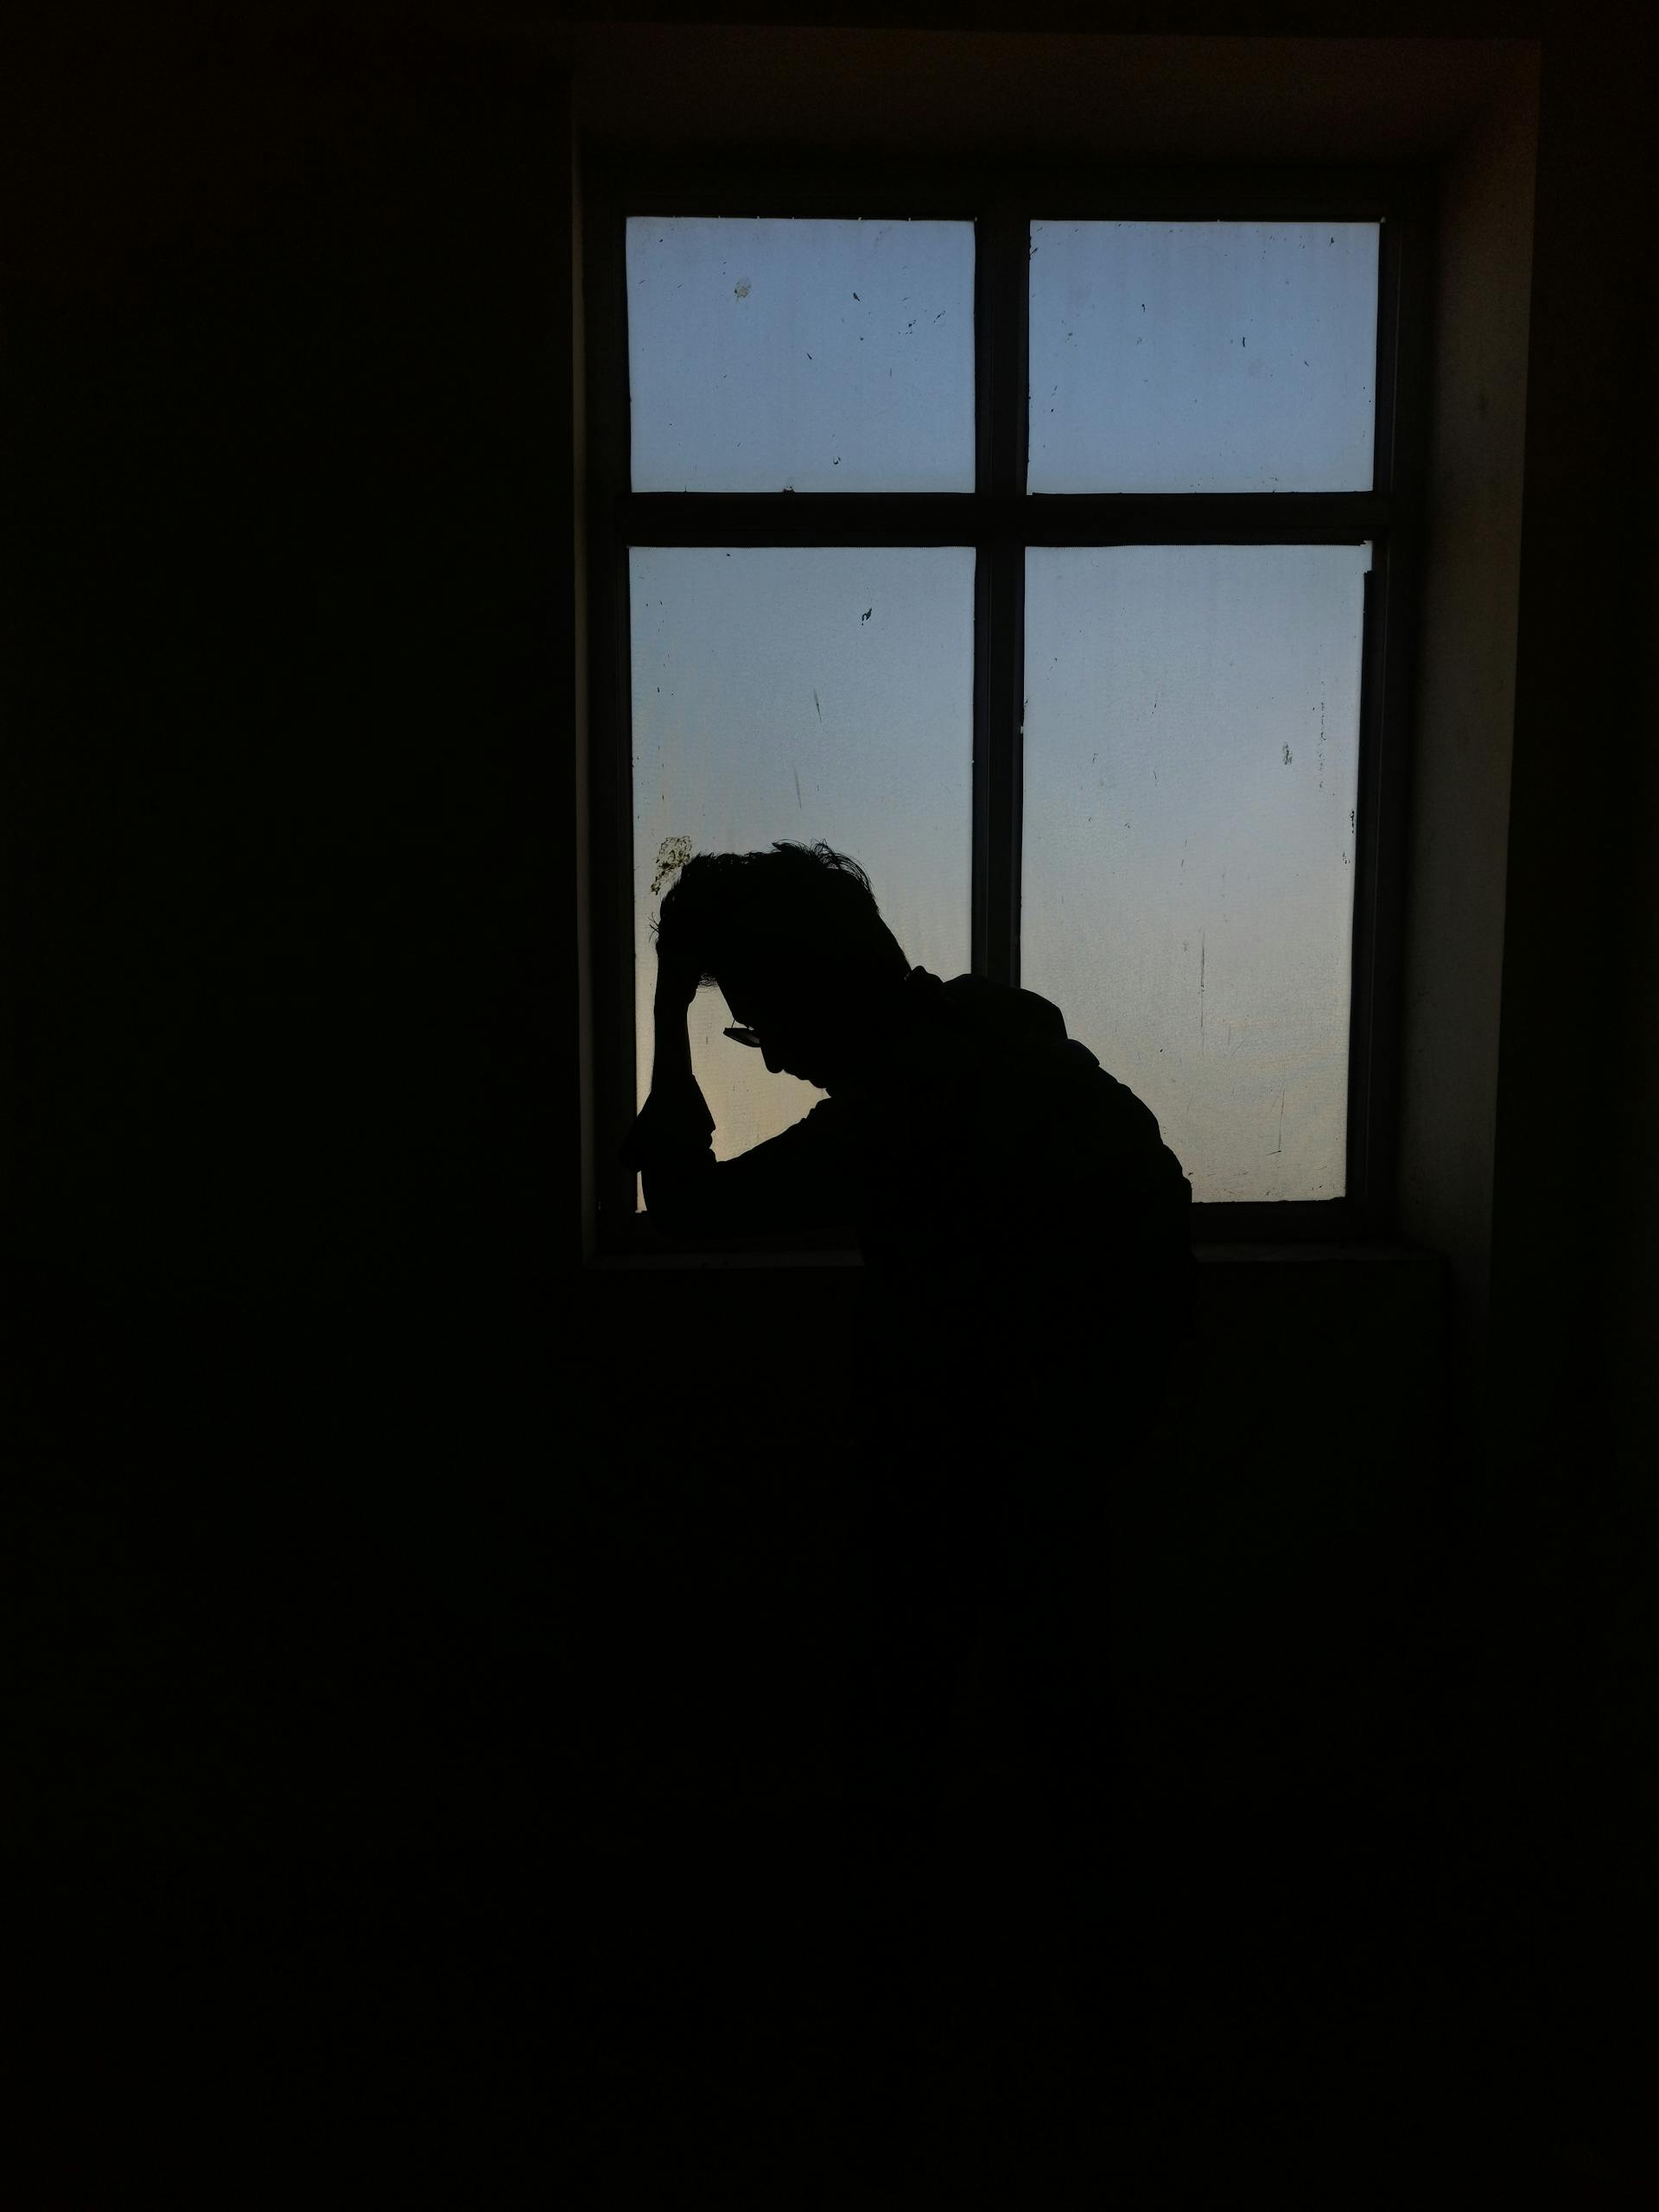 A man beside a window | Source: Pexels